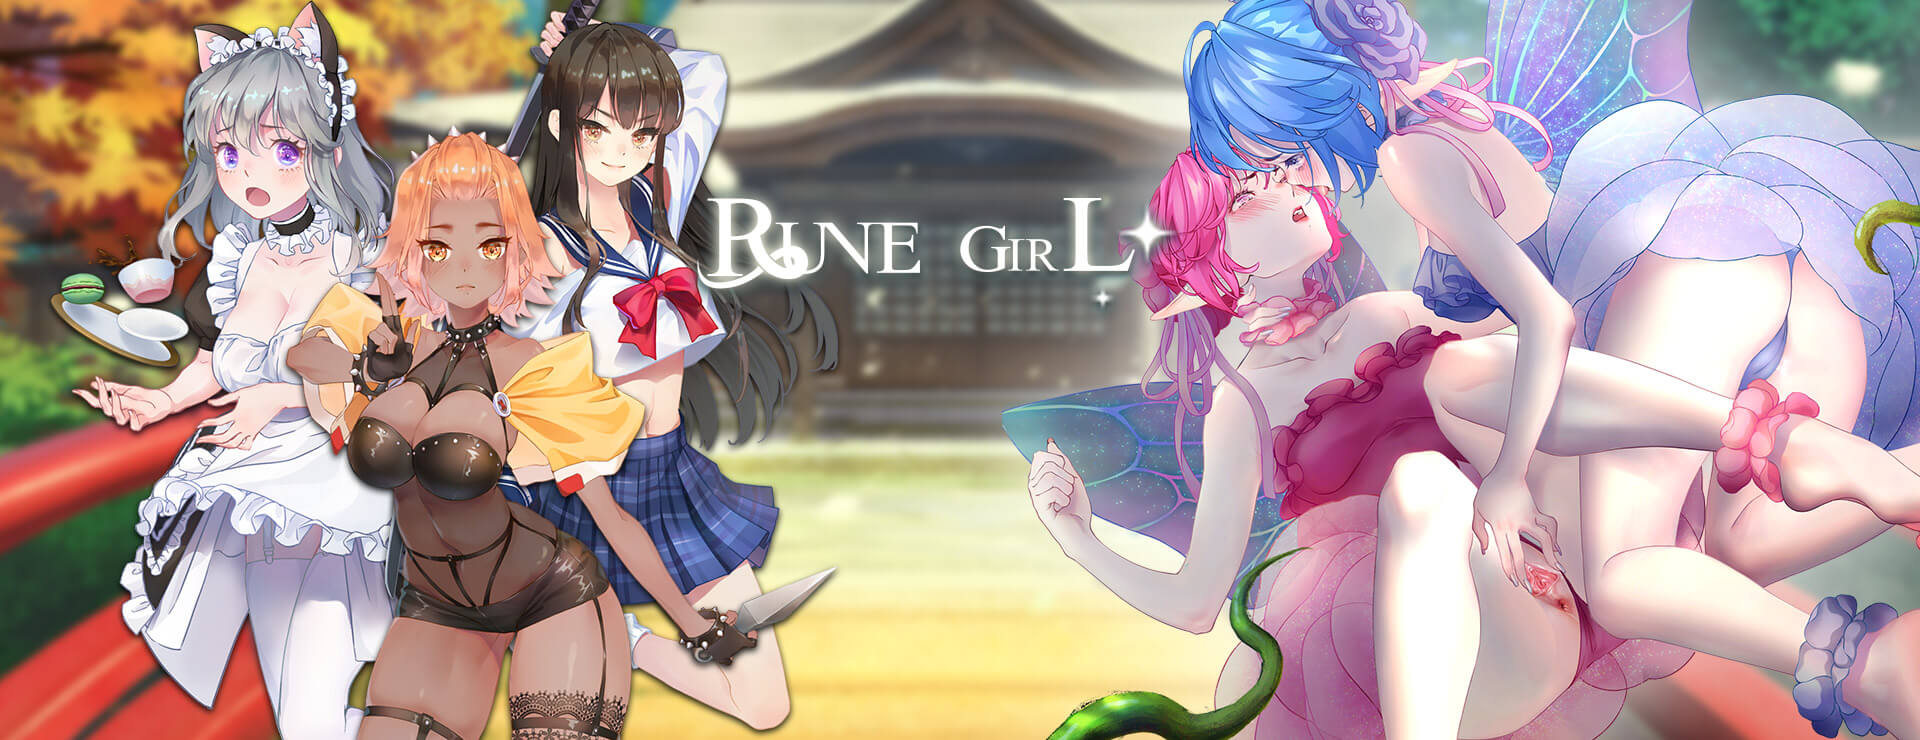 Rune Girl - Casual Game